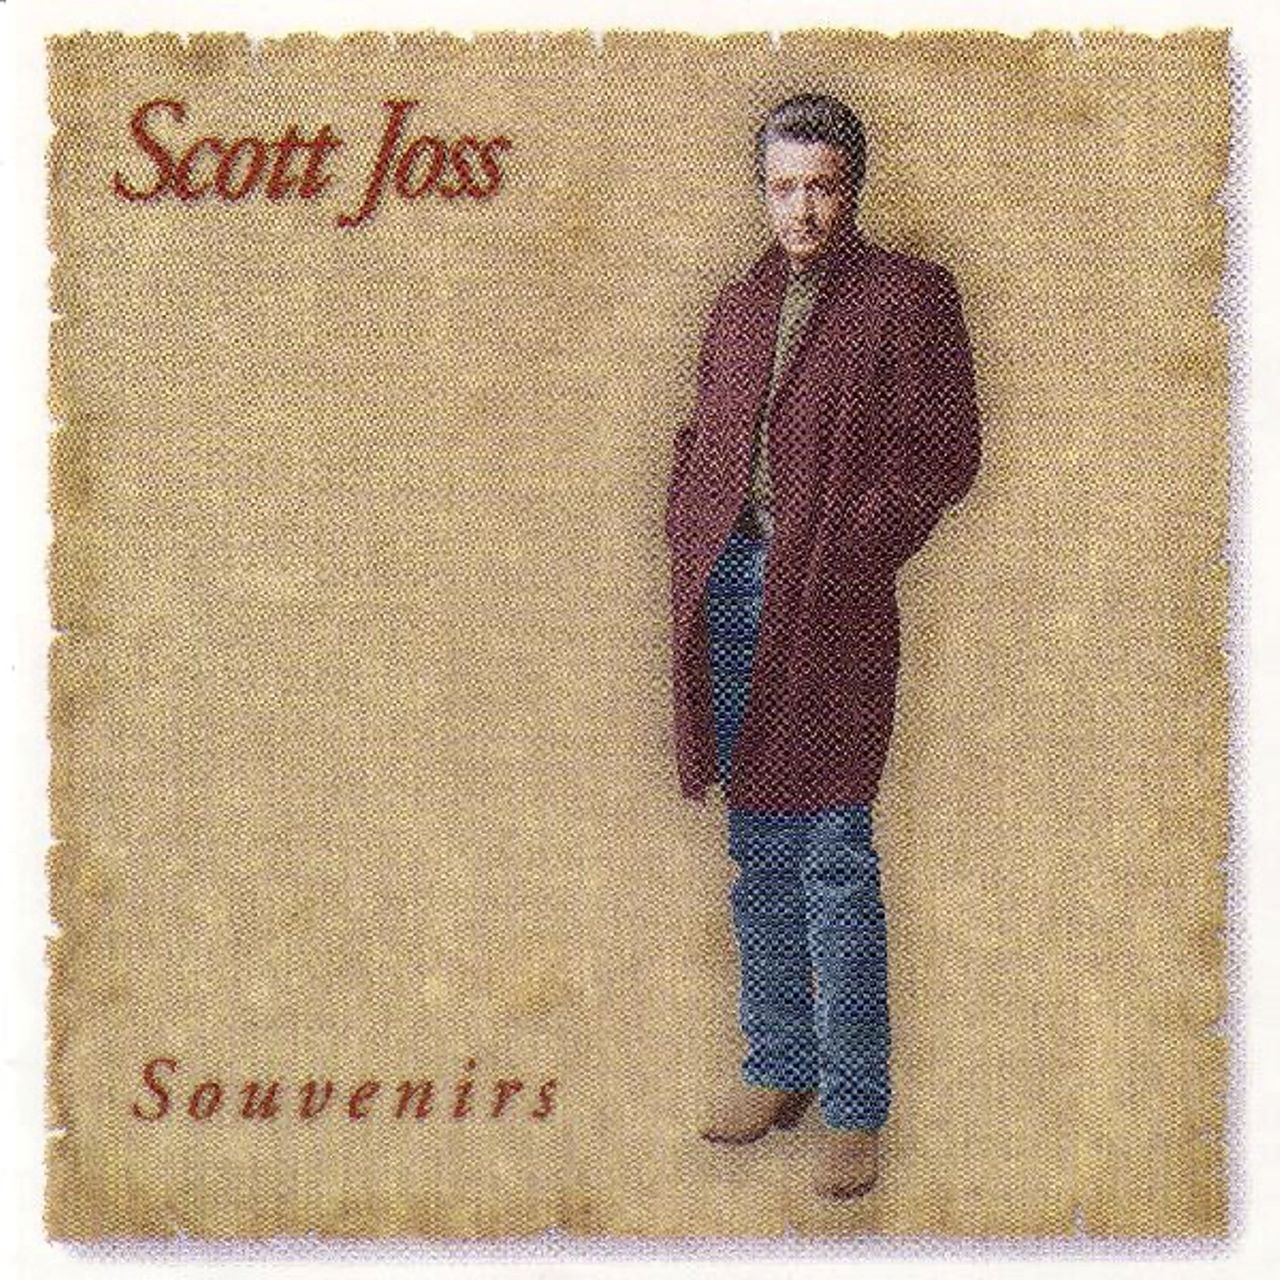 Scott Joss - Souvenirs cover album